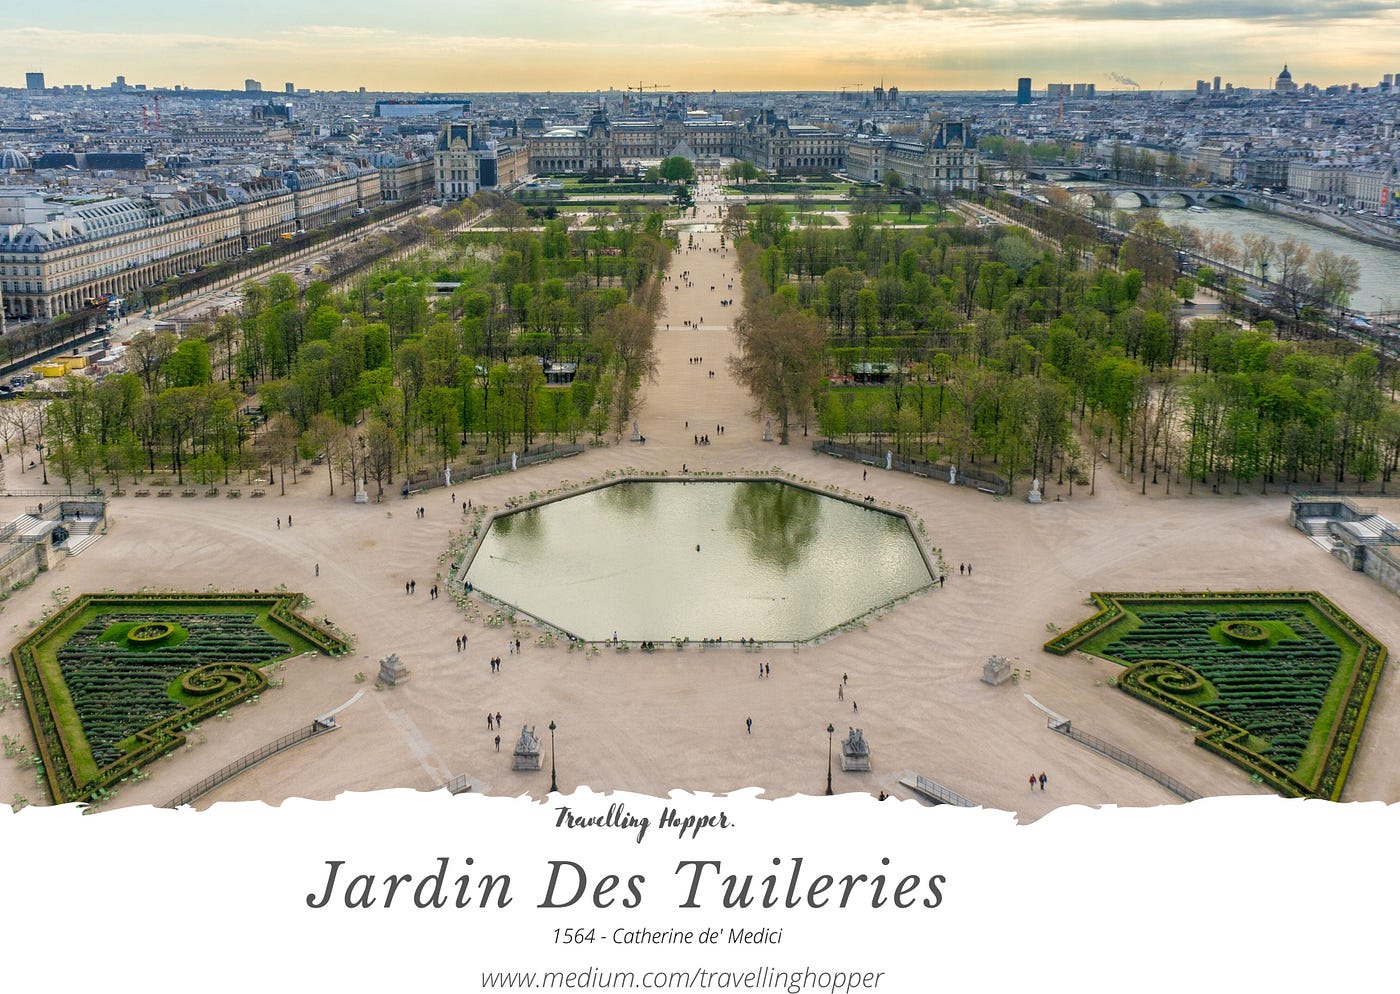 Paris Guide | Parks and Gardens in Paris | Travelling Hopper